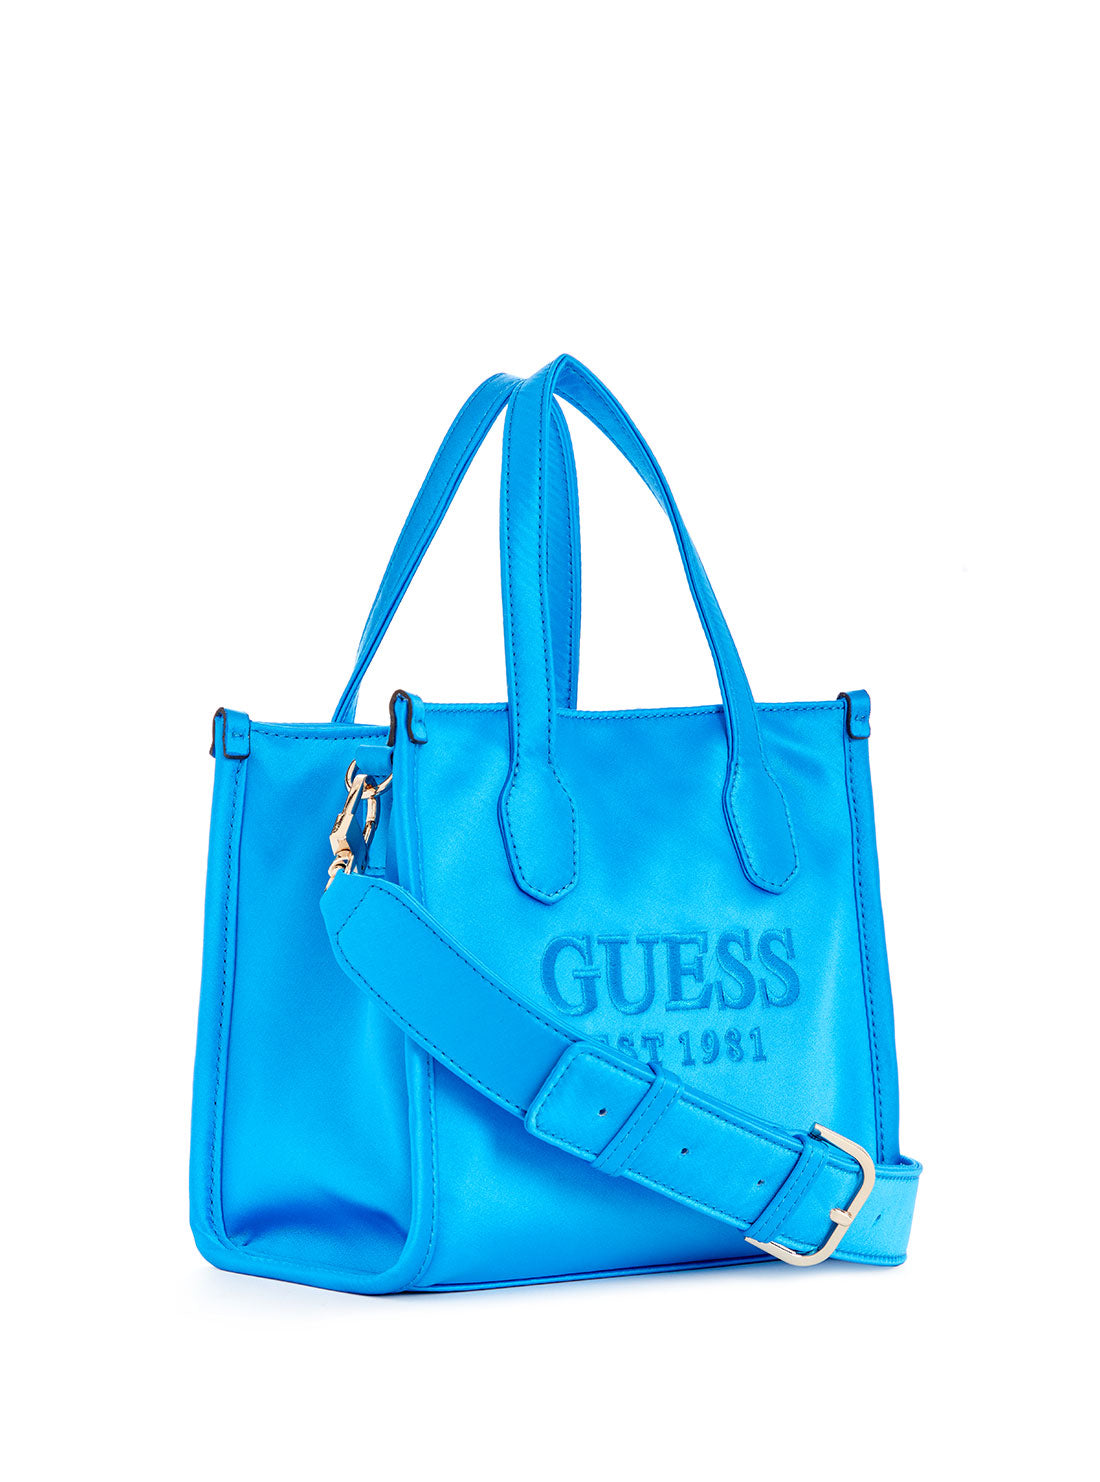 GUESS Blue Silvana Mini Tote Bag side view